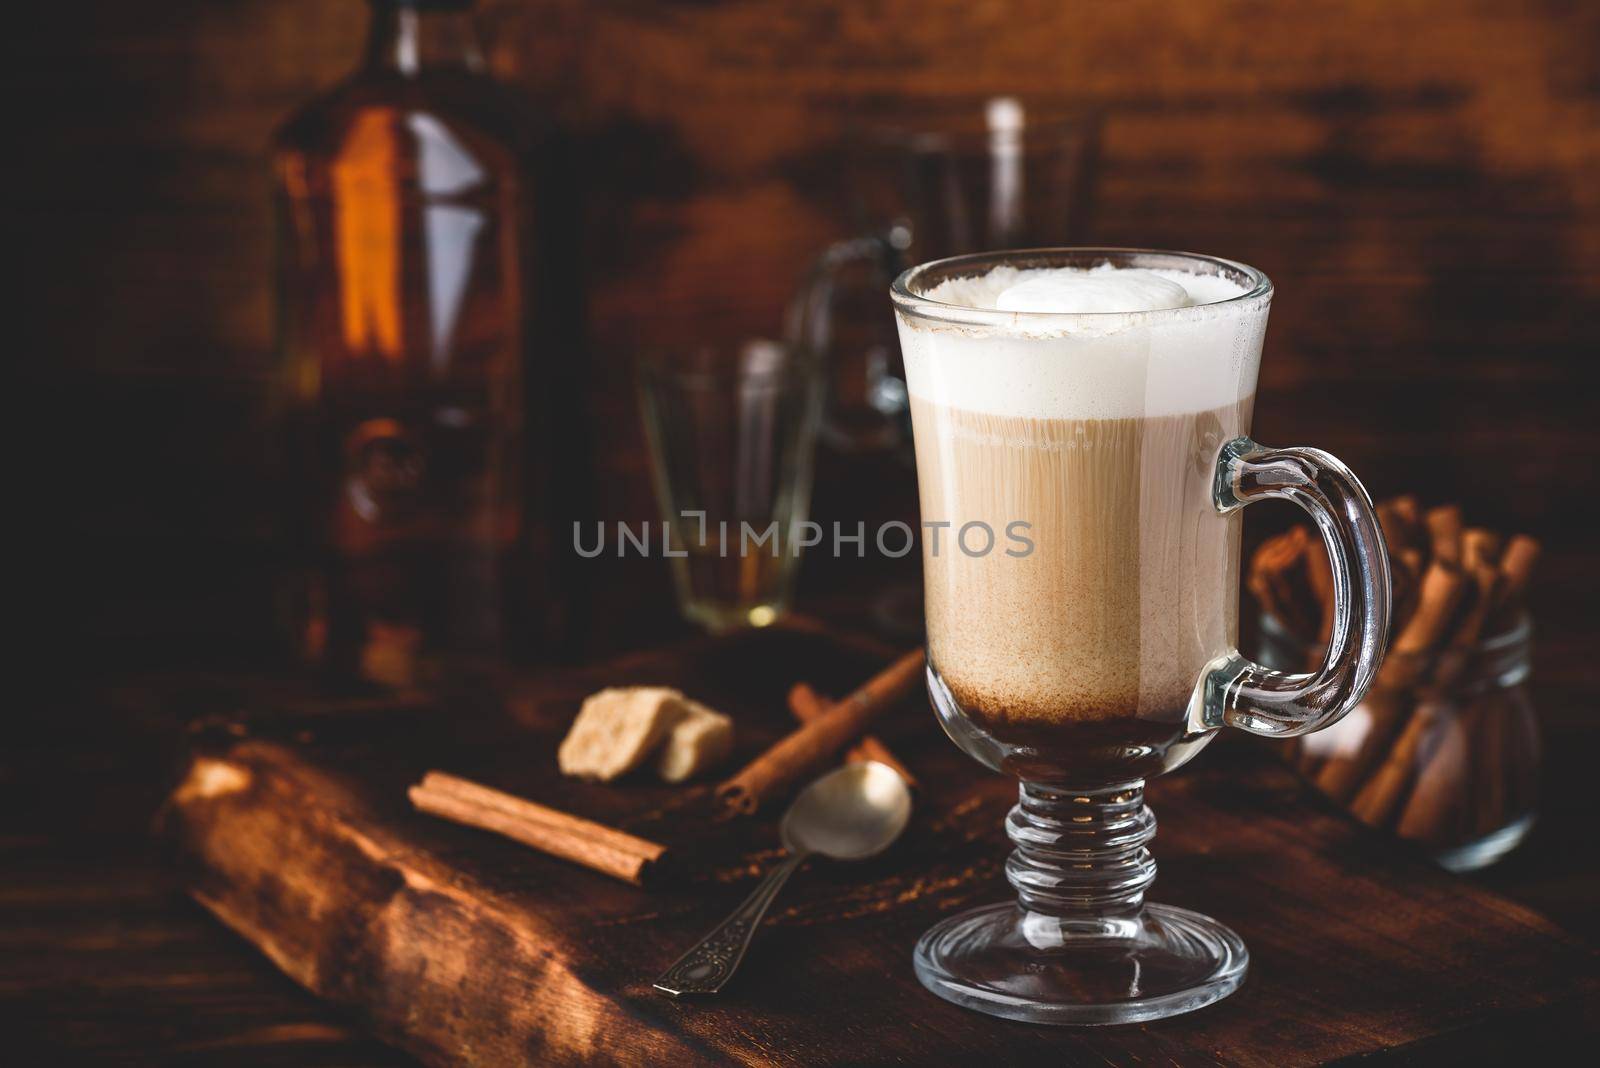 Irish coffee with cinnamon by Seva_blsv